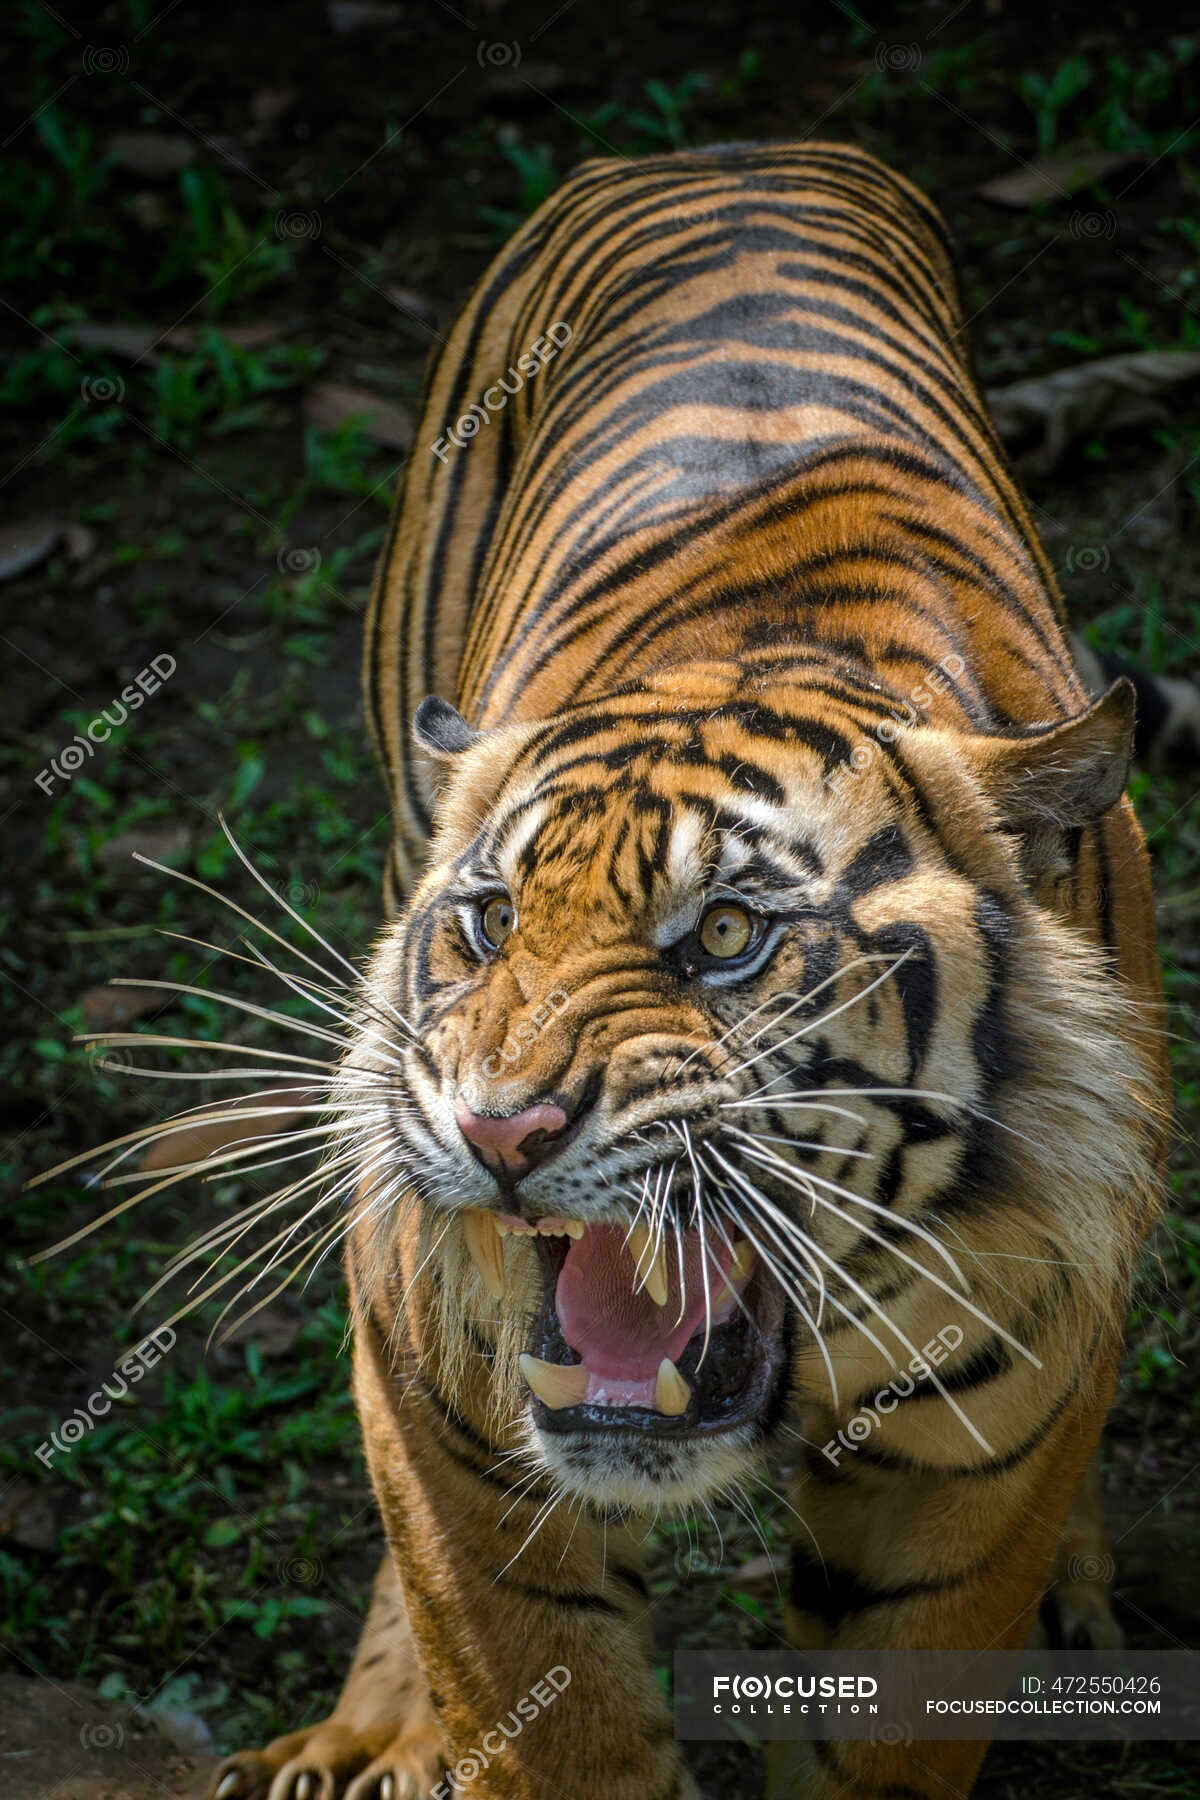 Tiger roar